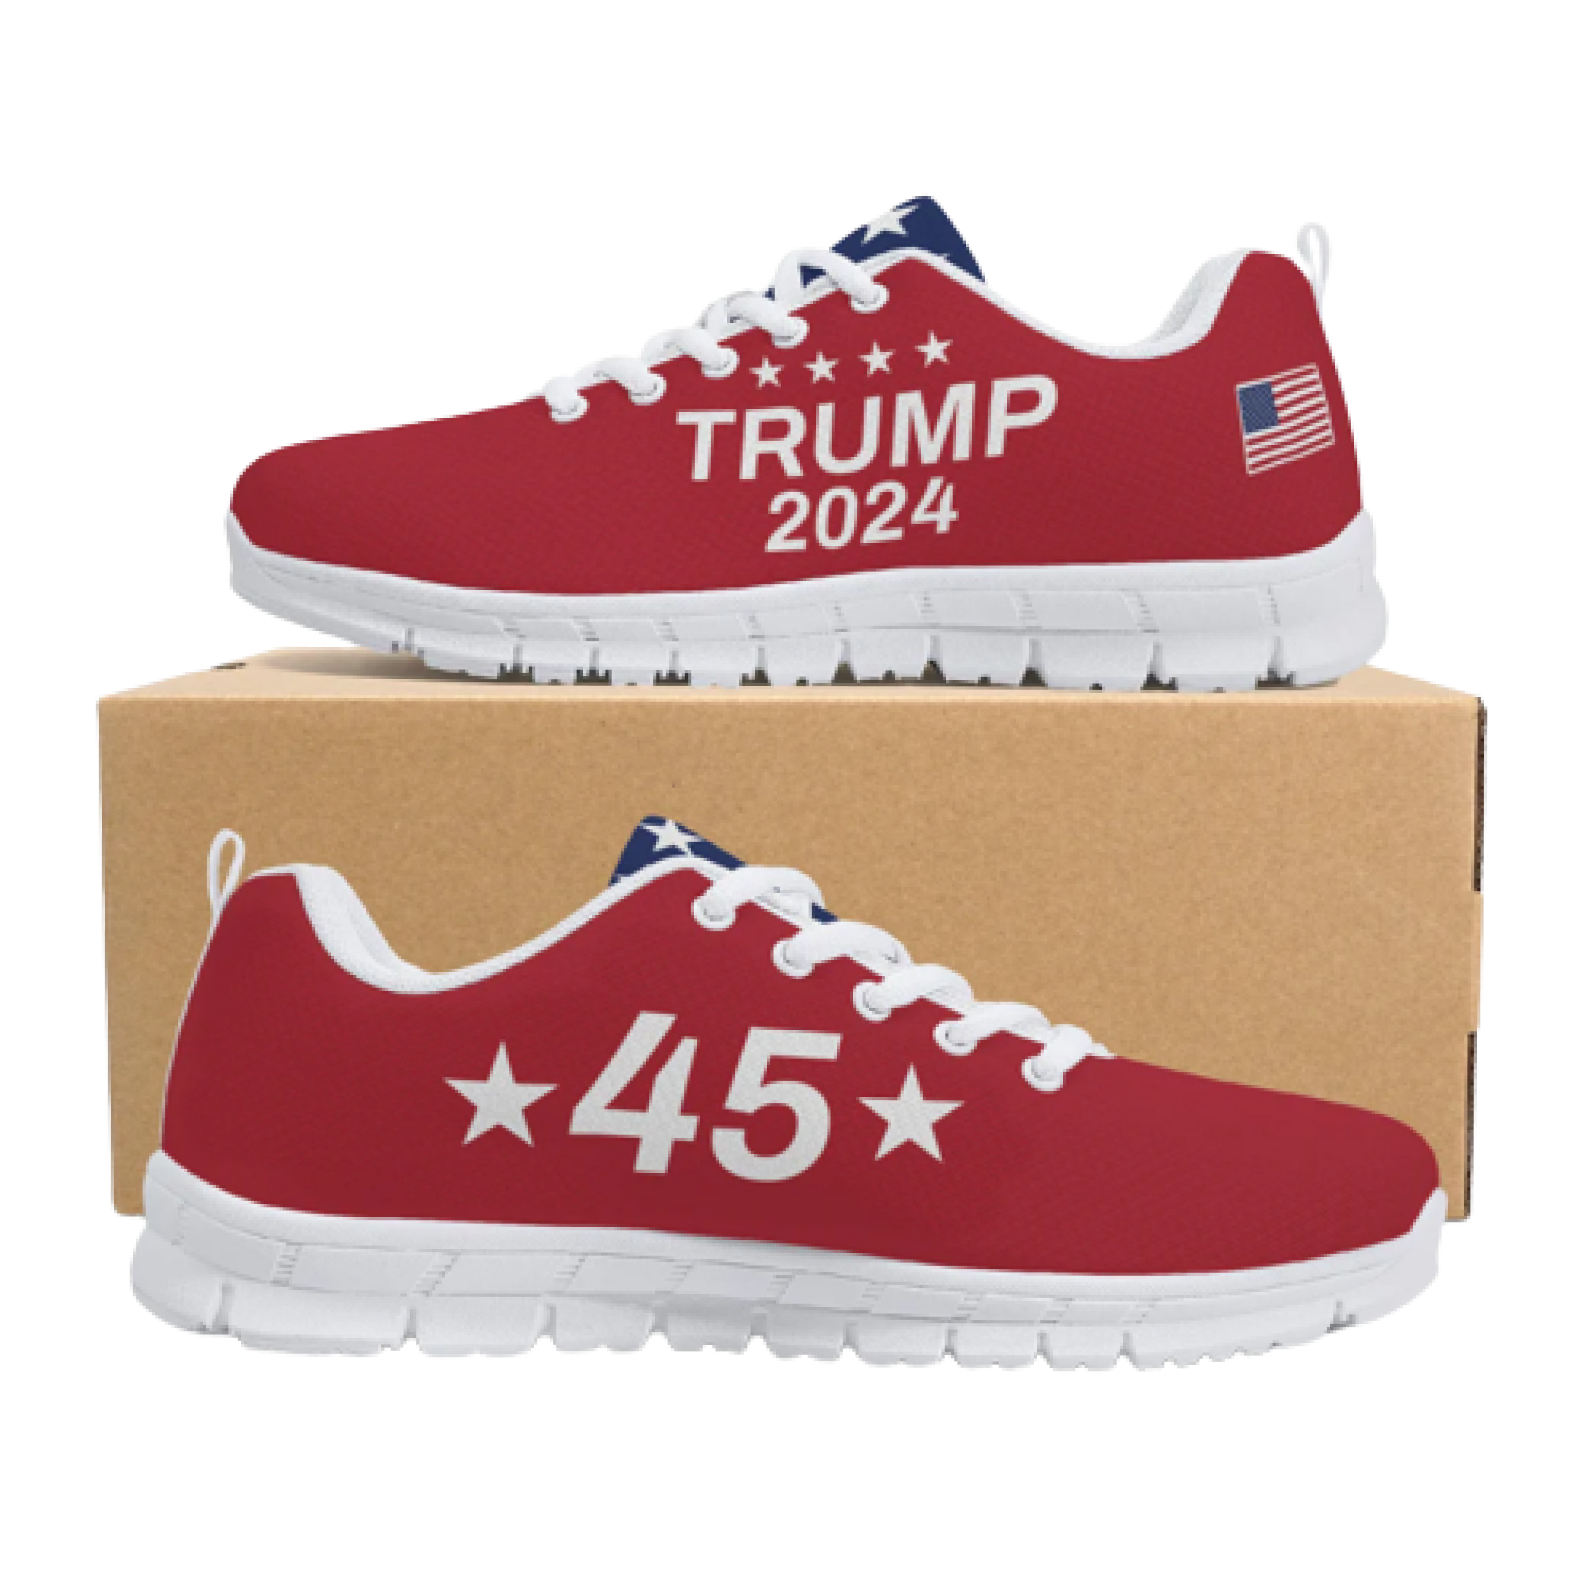 Trump Sneakers 2024 FEMALE